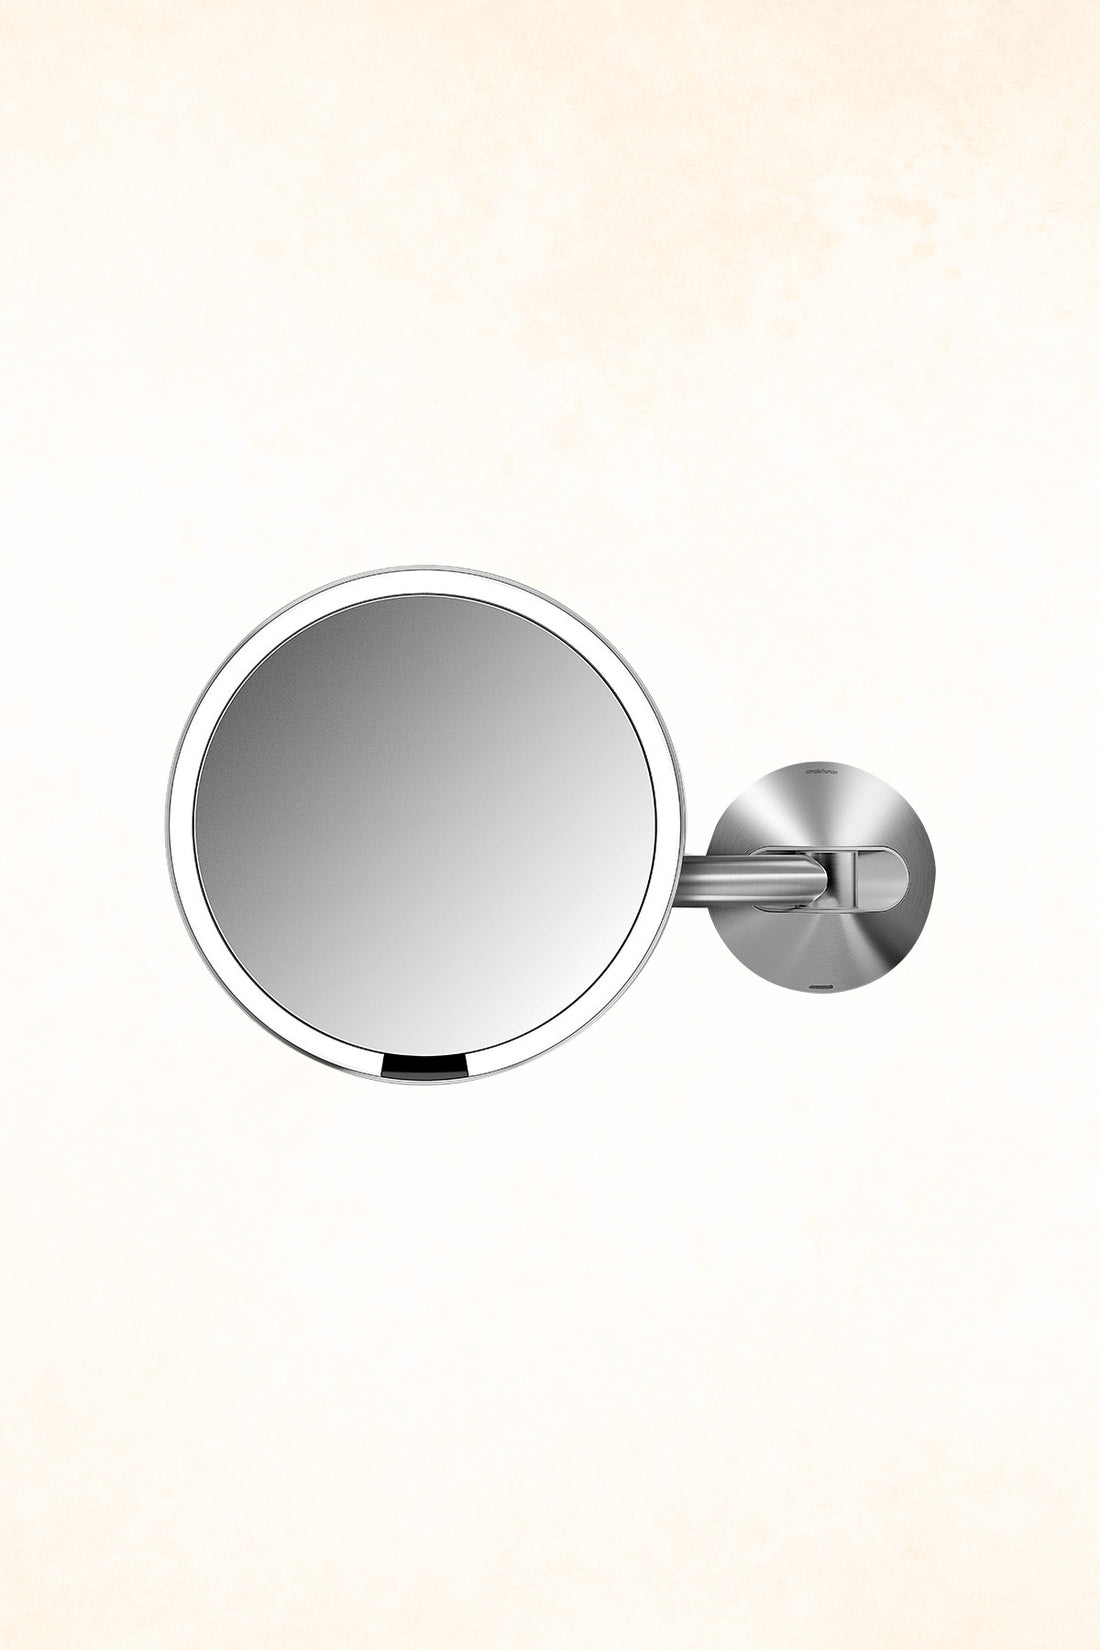 Simplehuman – 20cm sensor mirror - 5 x Magnification - Rechargeable - Brushed